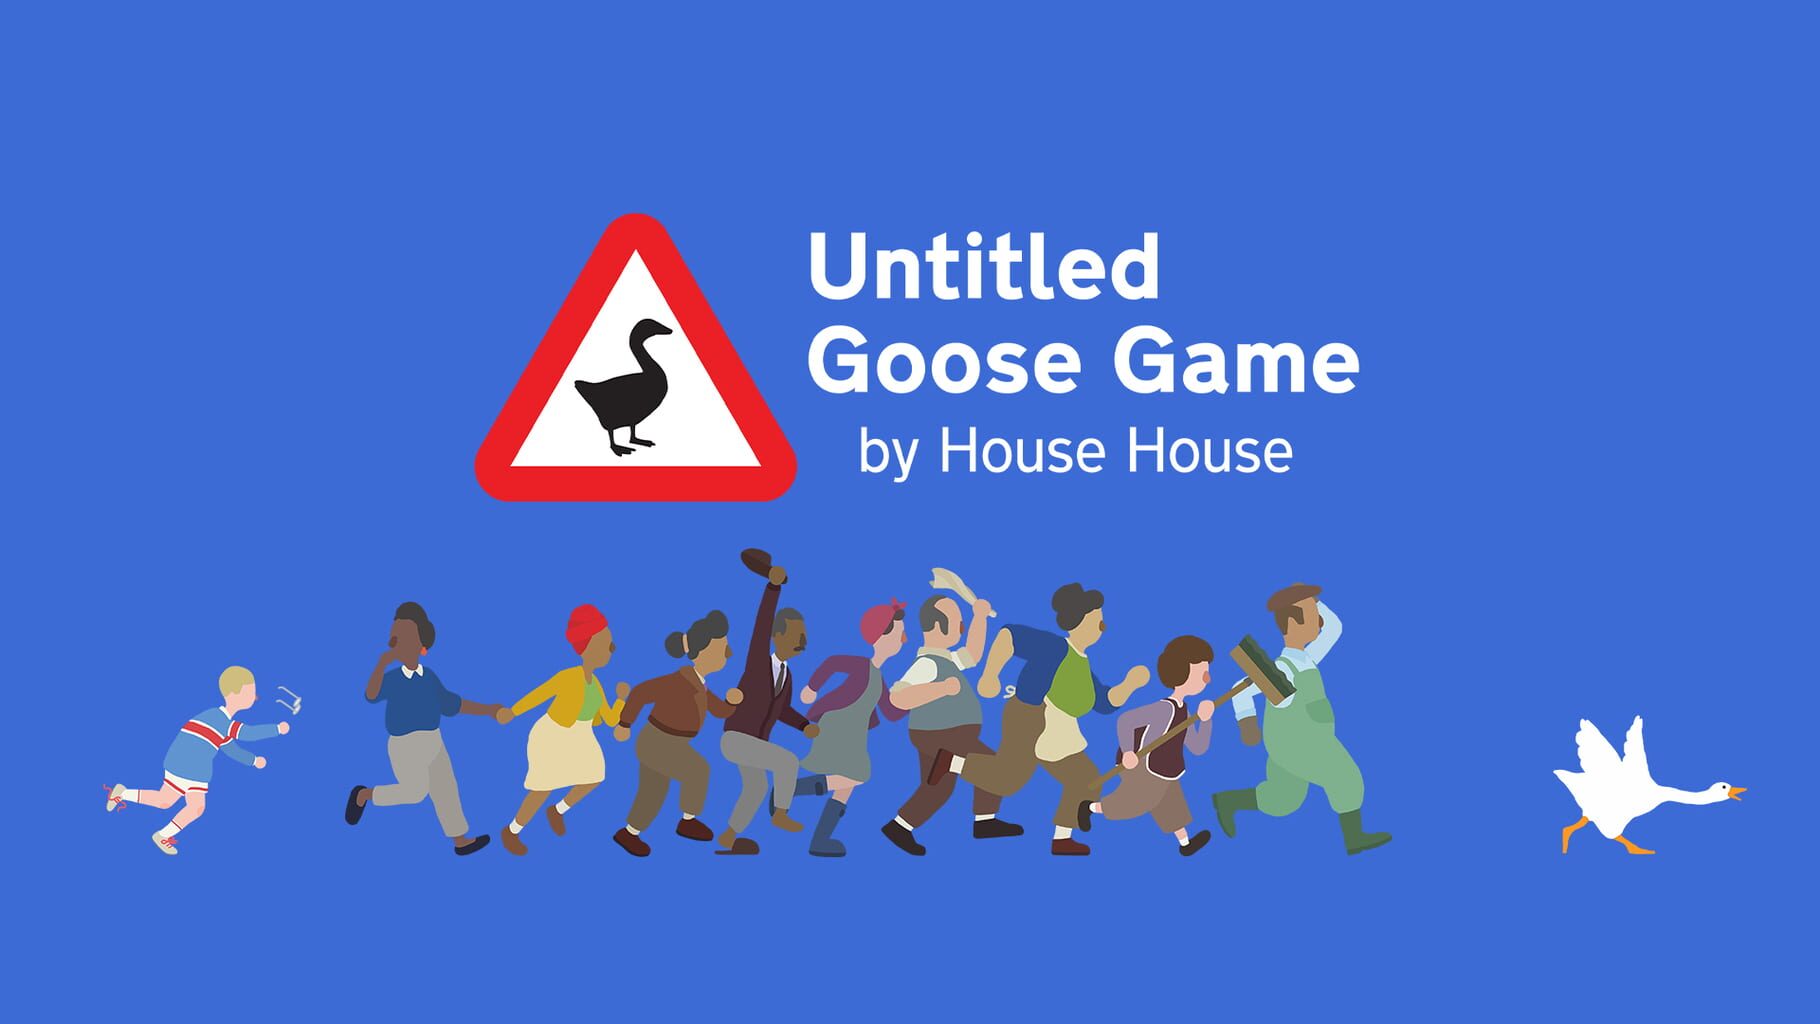 Artwork for Untitled Goose Game